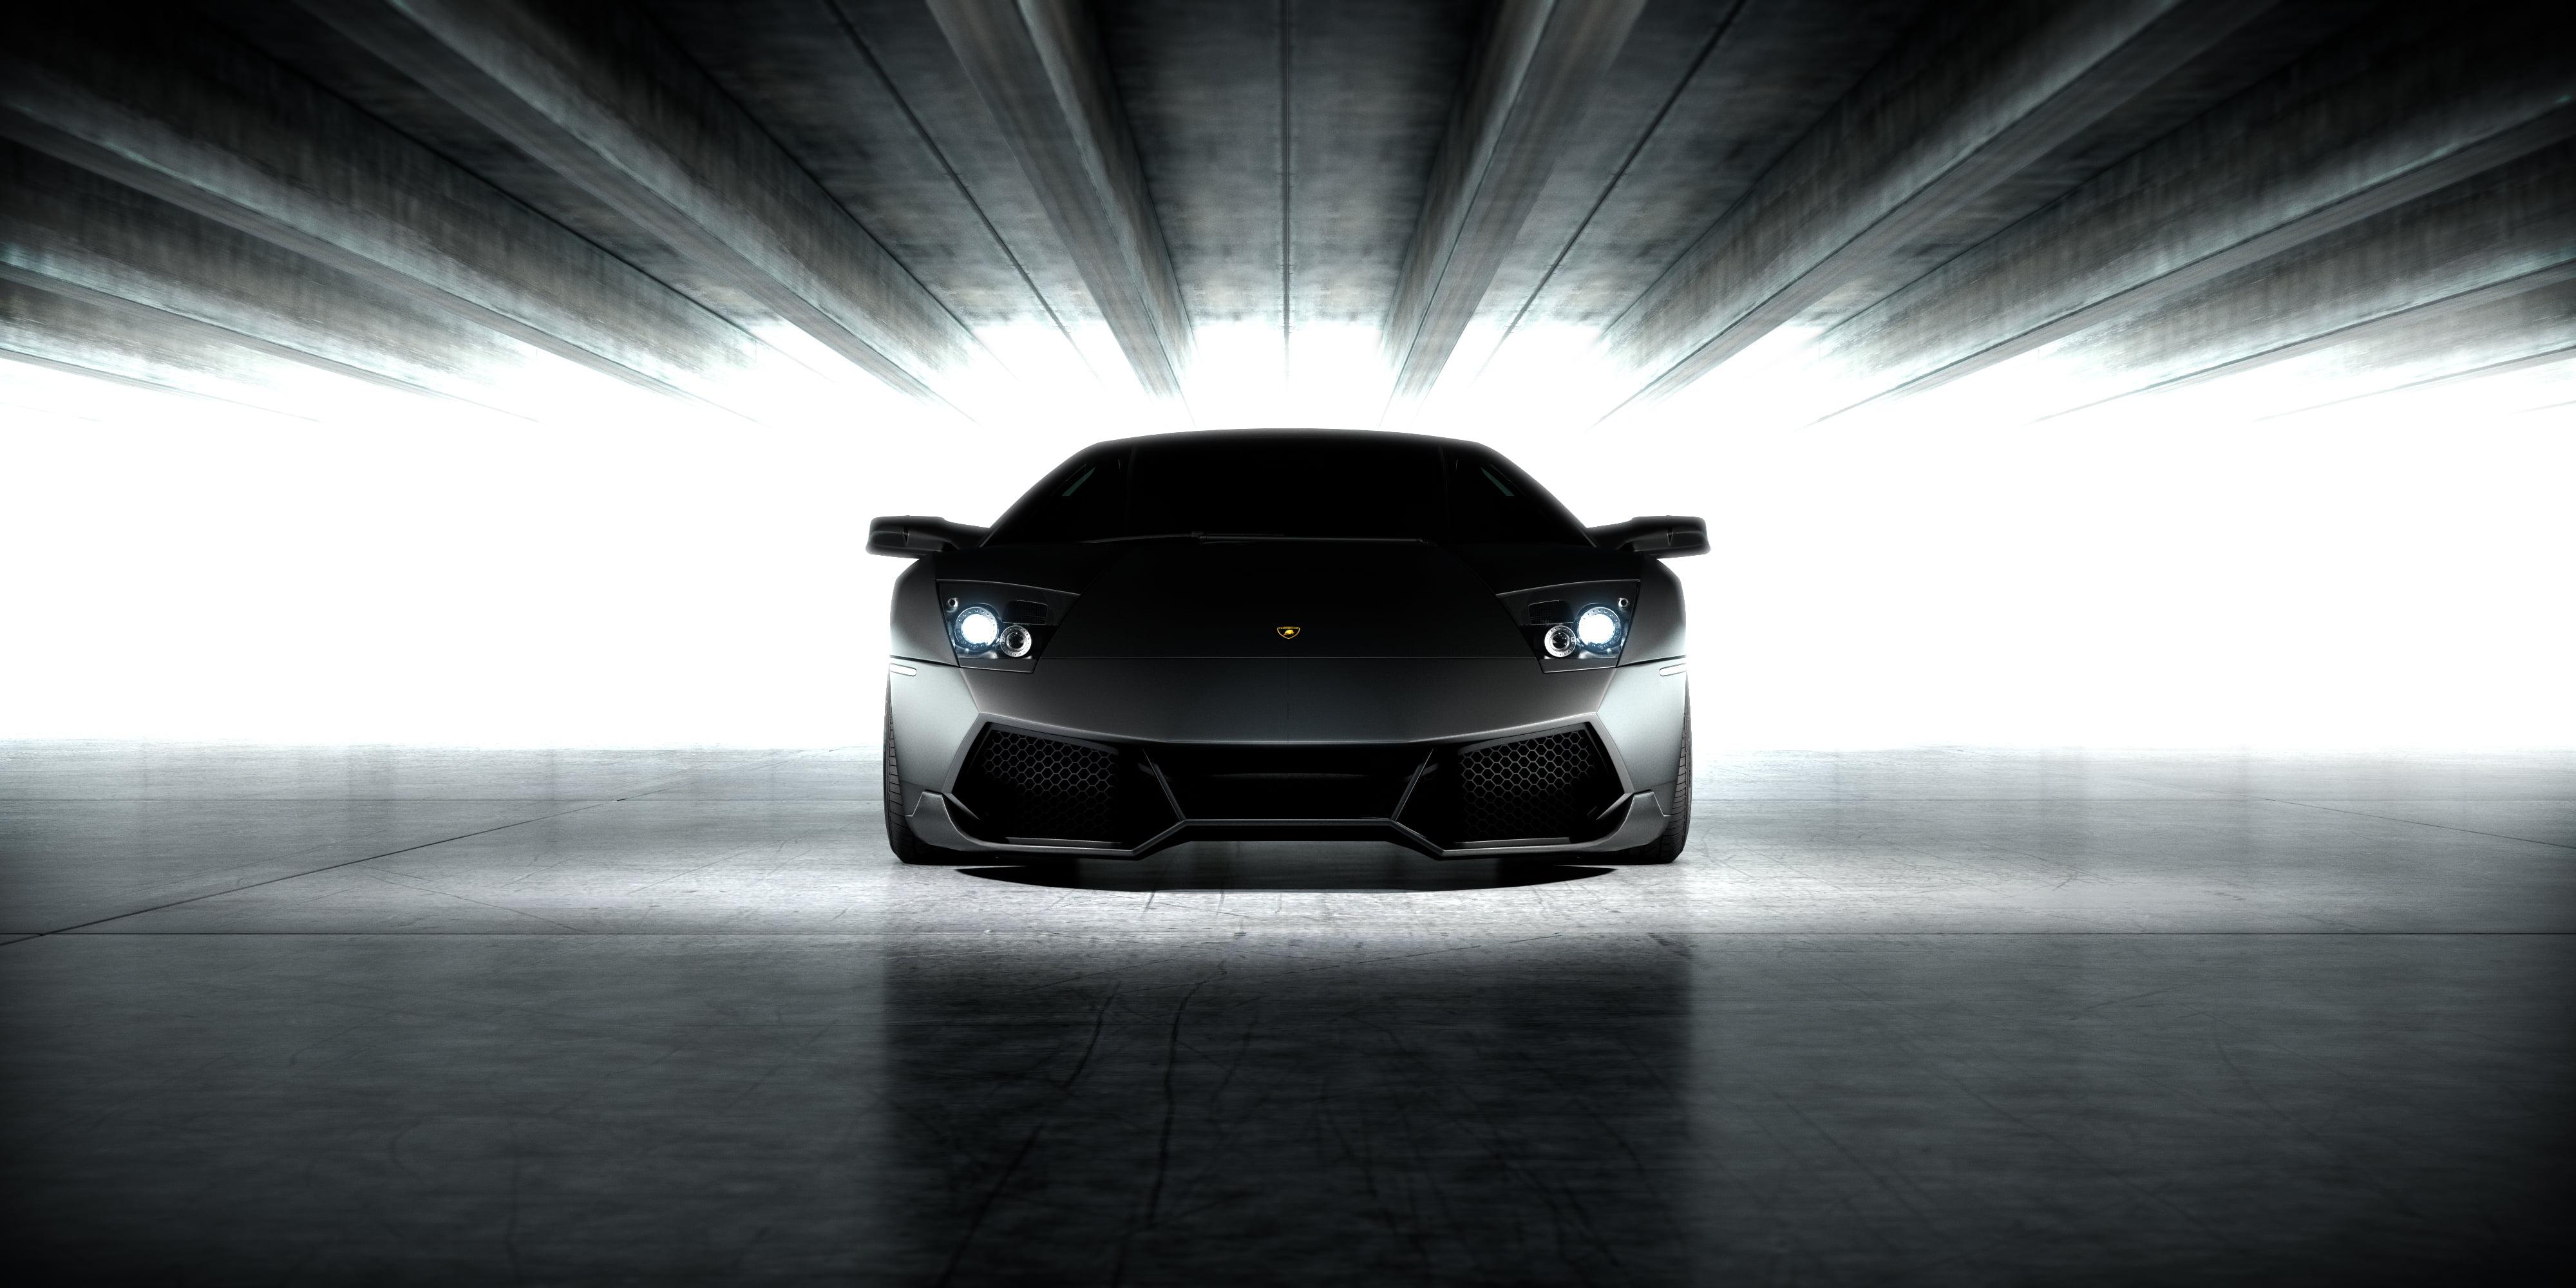 Lamborghini Led Lights Lambo With Underglow